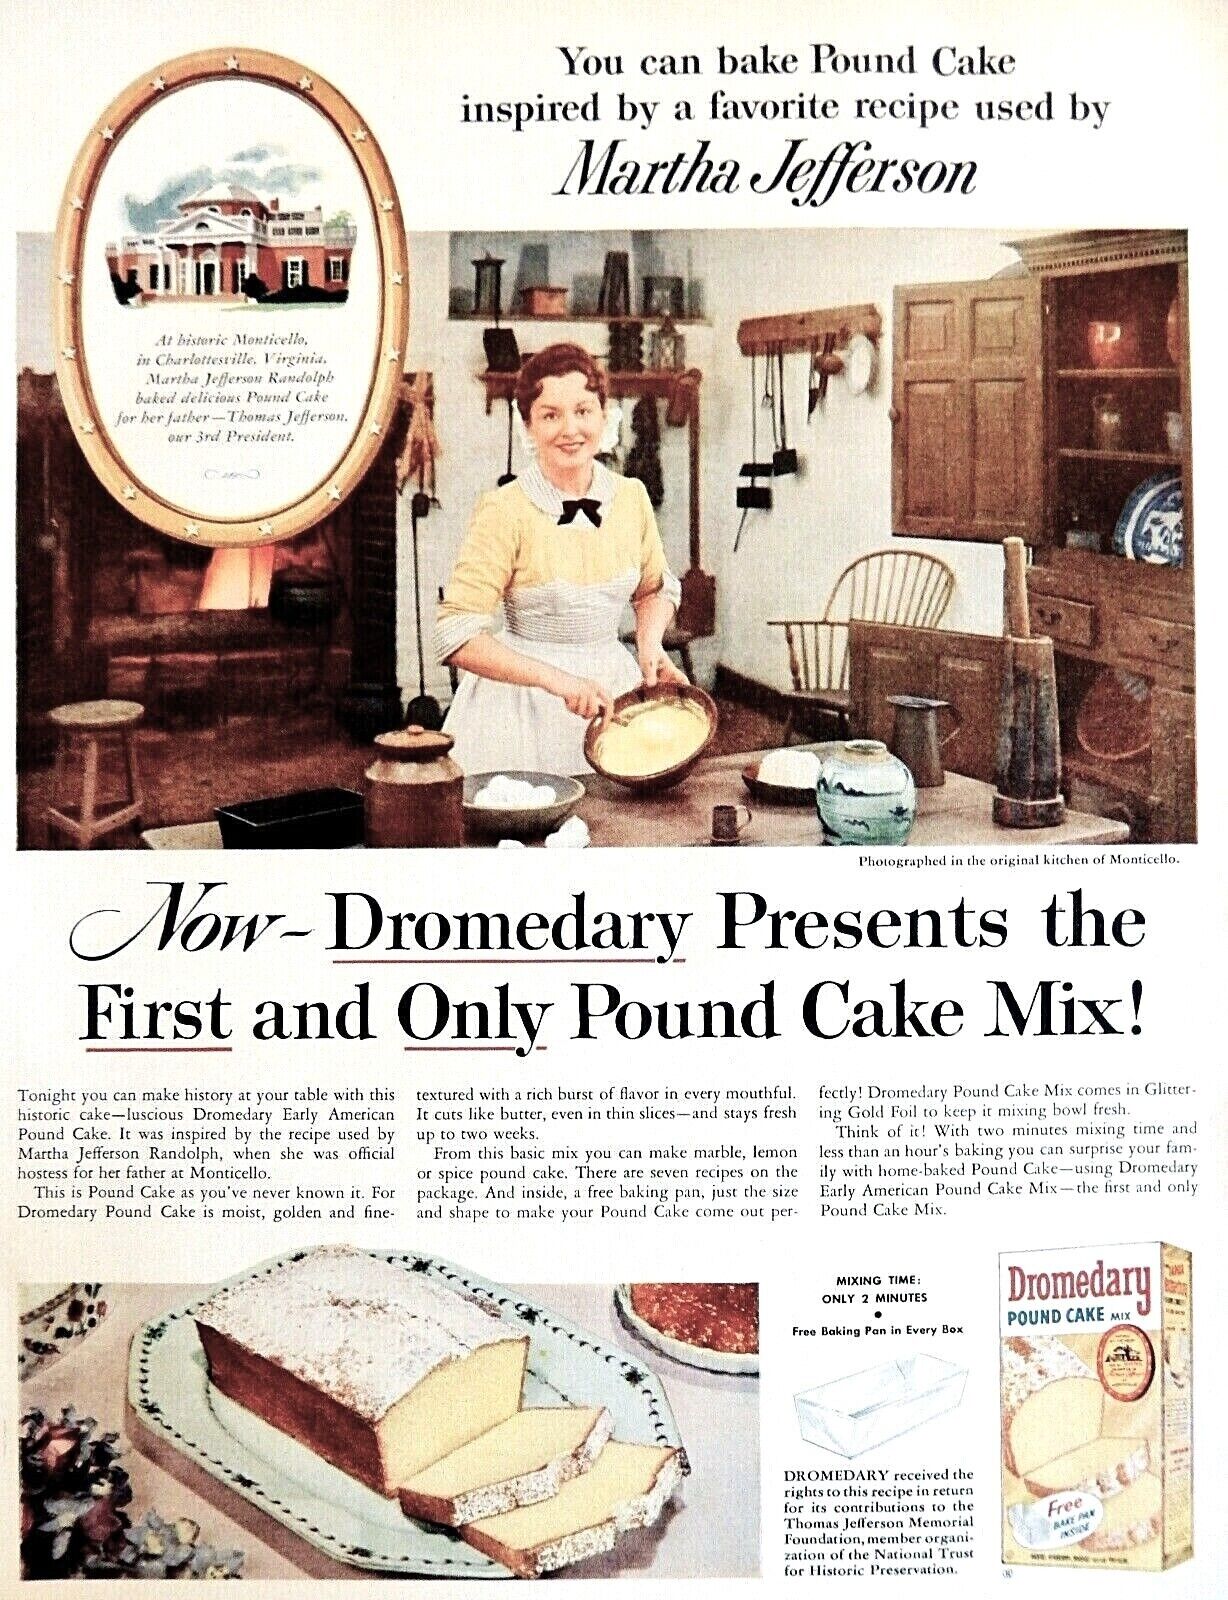 Dromedary Cake mix ad vintage 1956 Jefferson Monticello kitchen advertisement